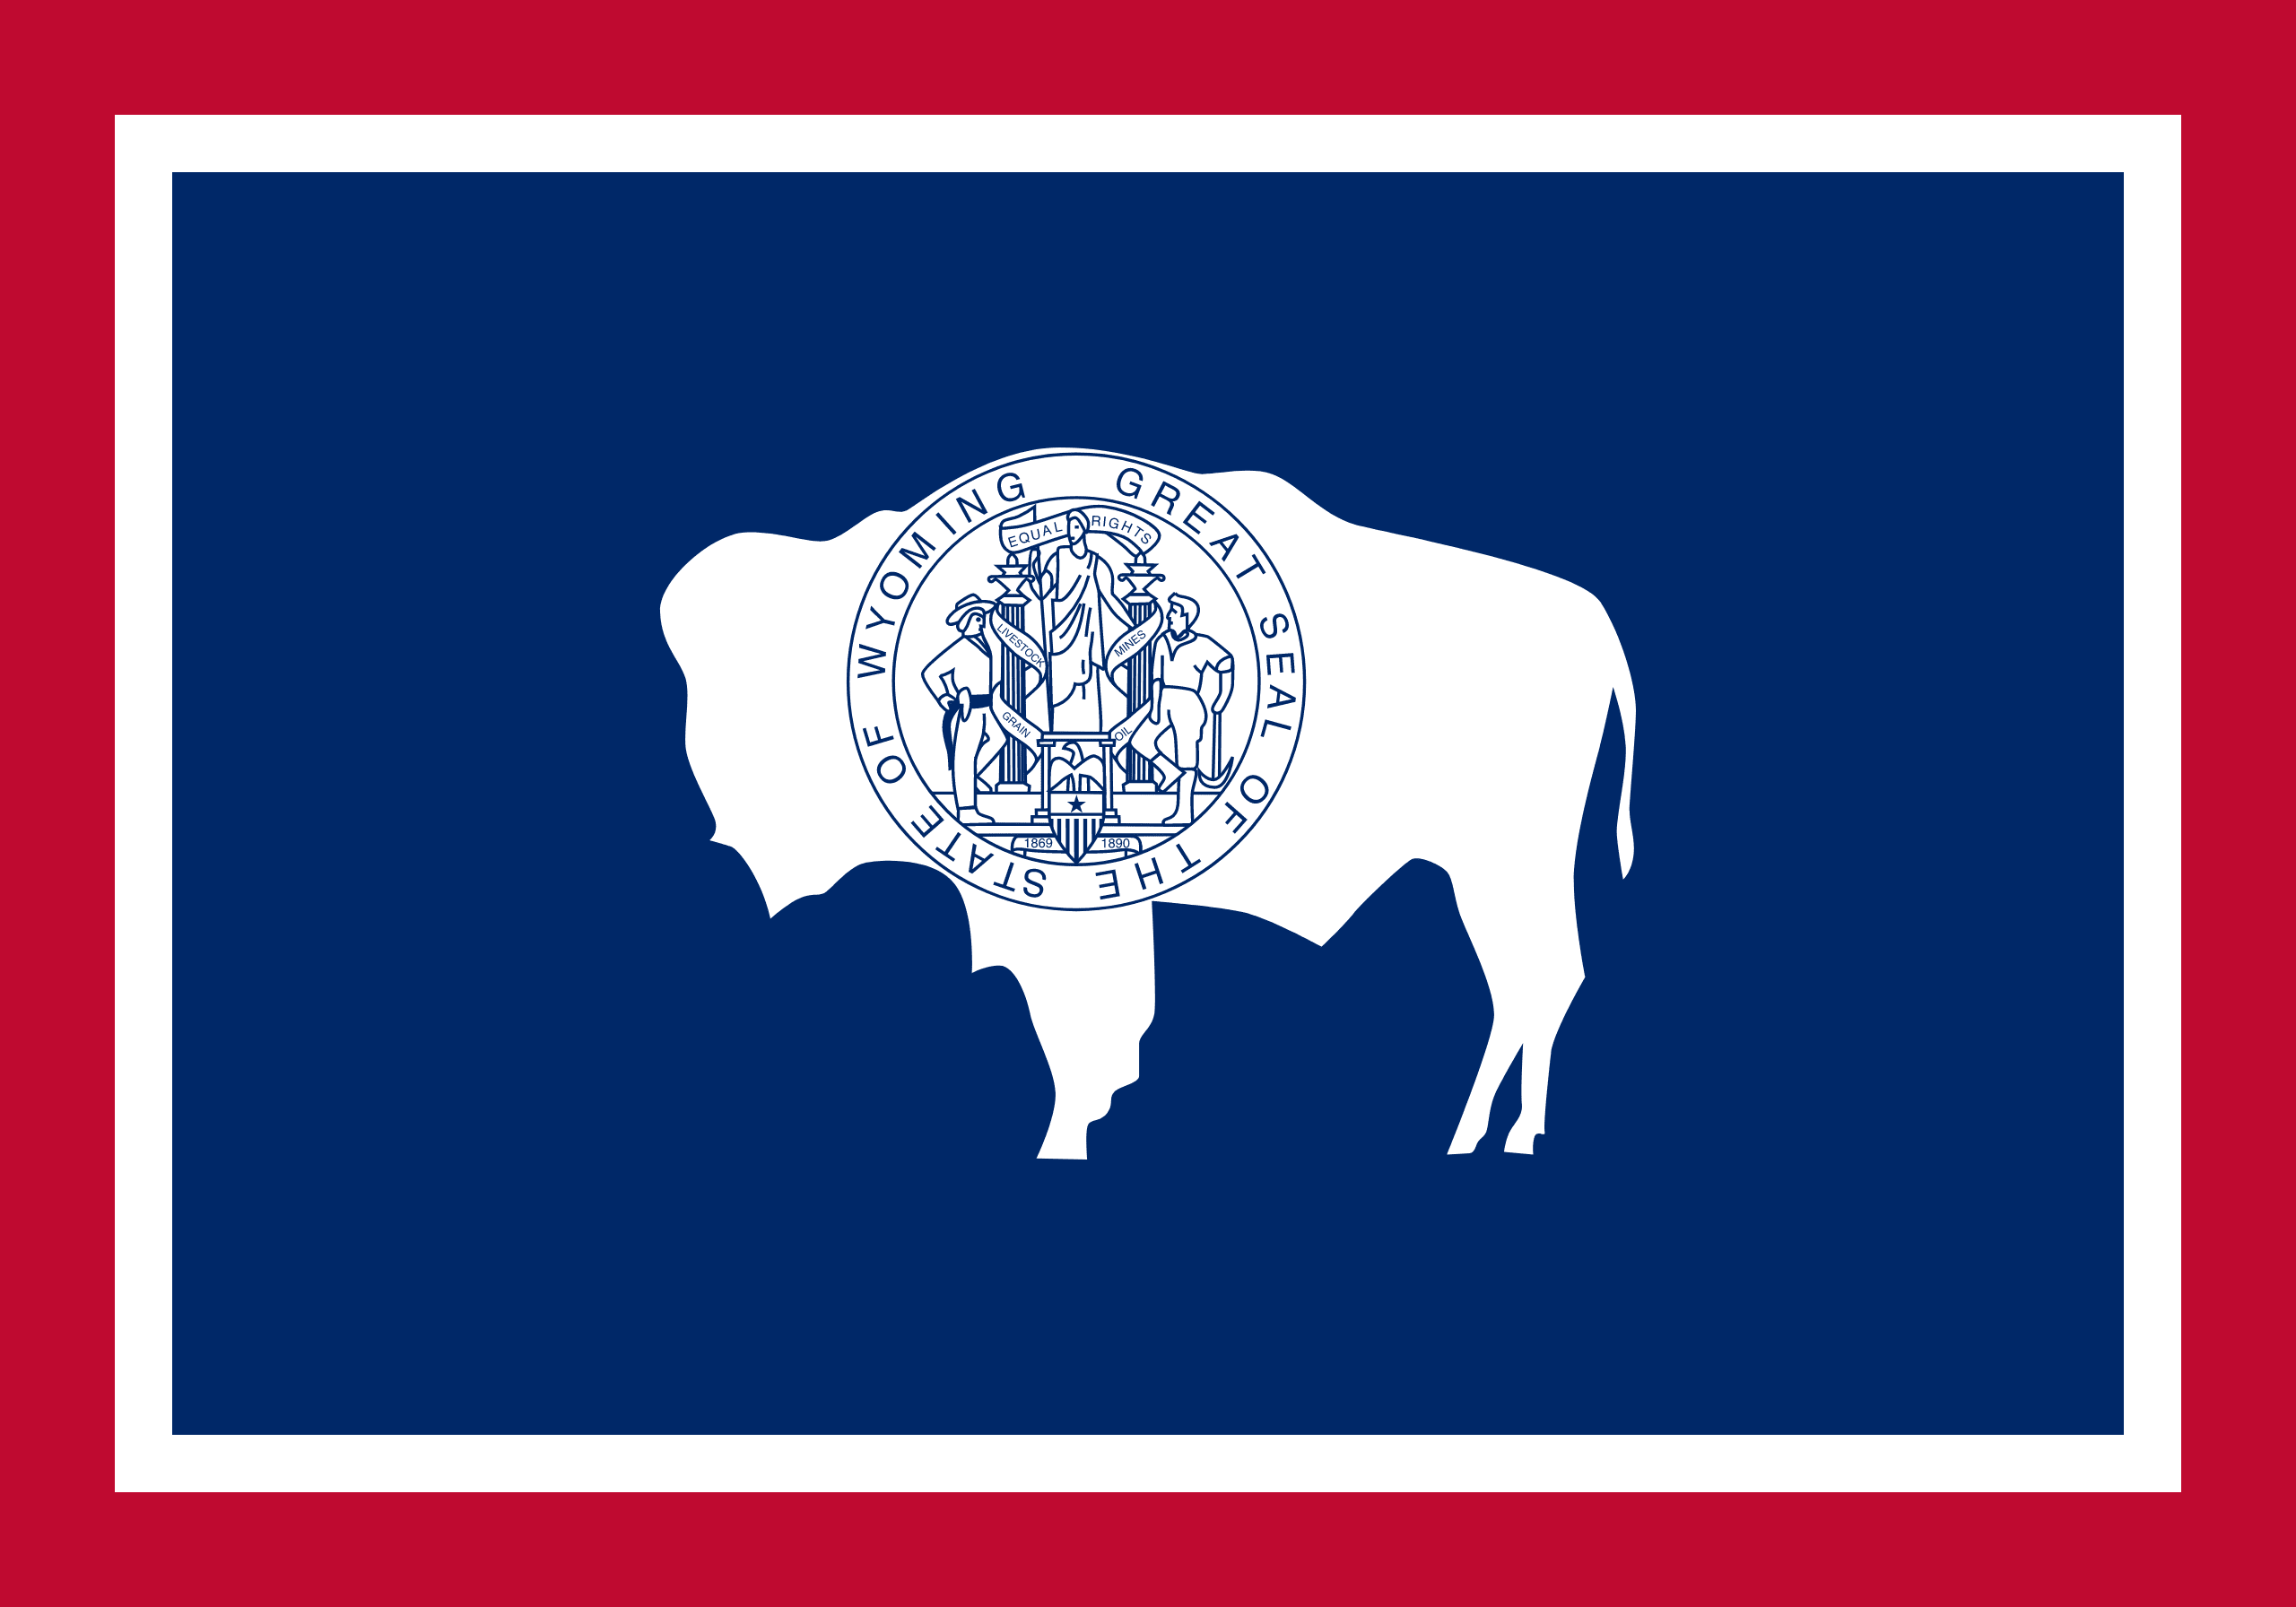 Wyoming License Plate Lookup